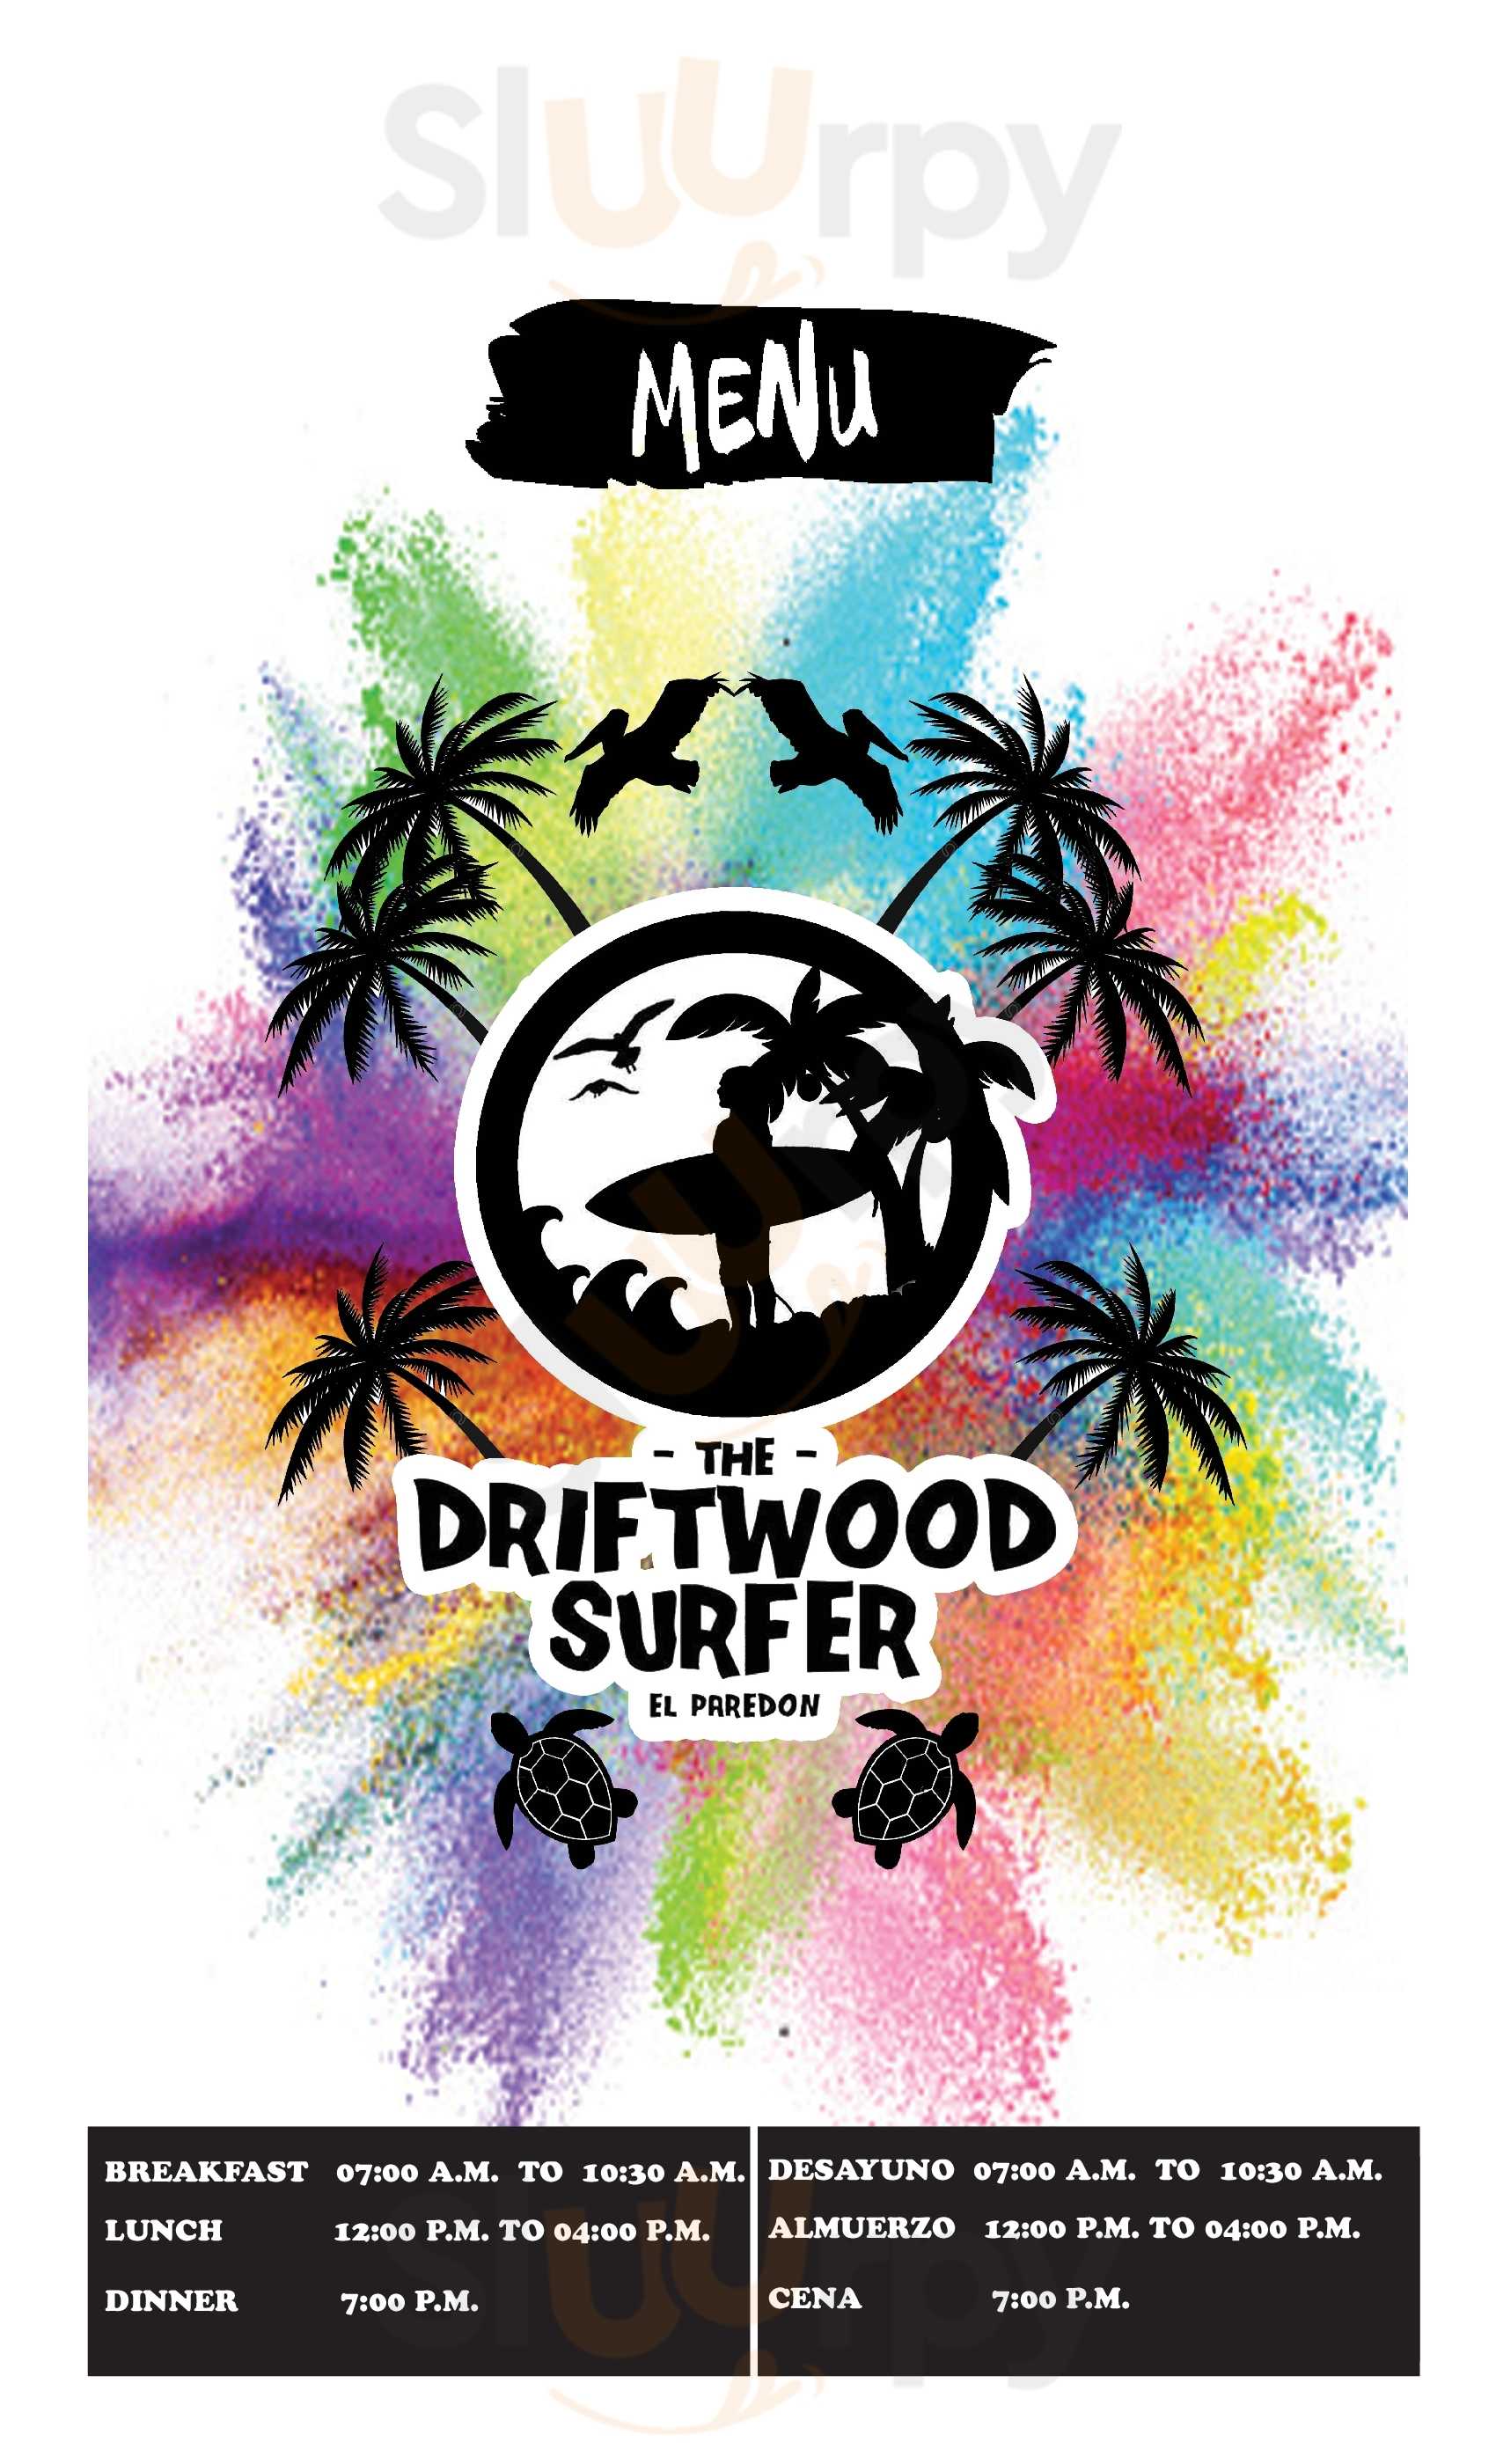 The Driftwood Surfer Restaurant El Paredón Menu - 1